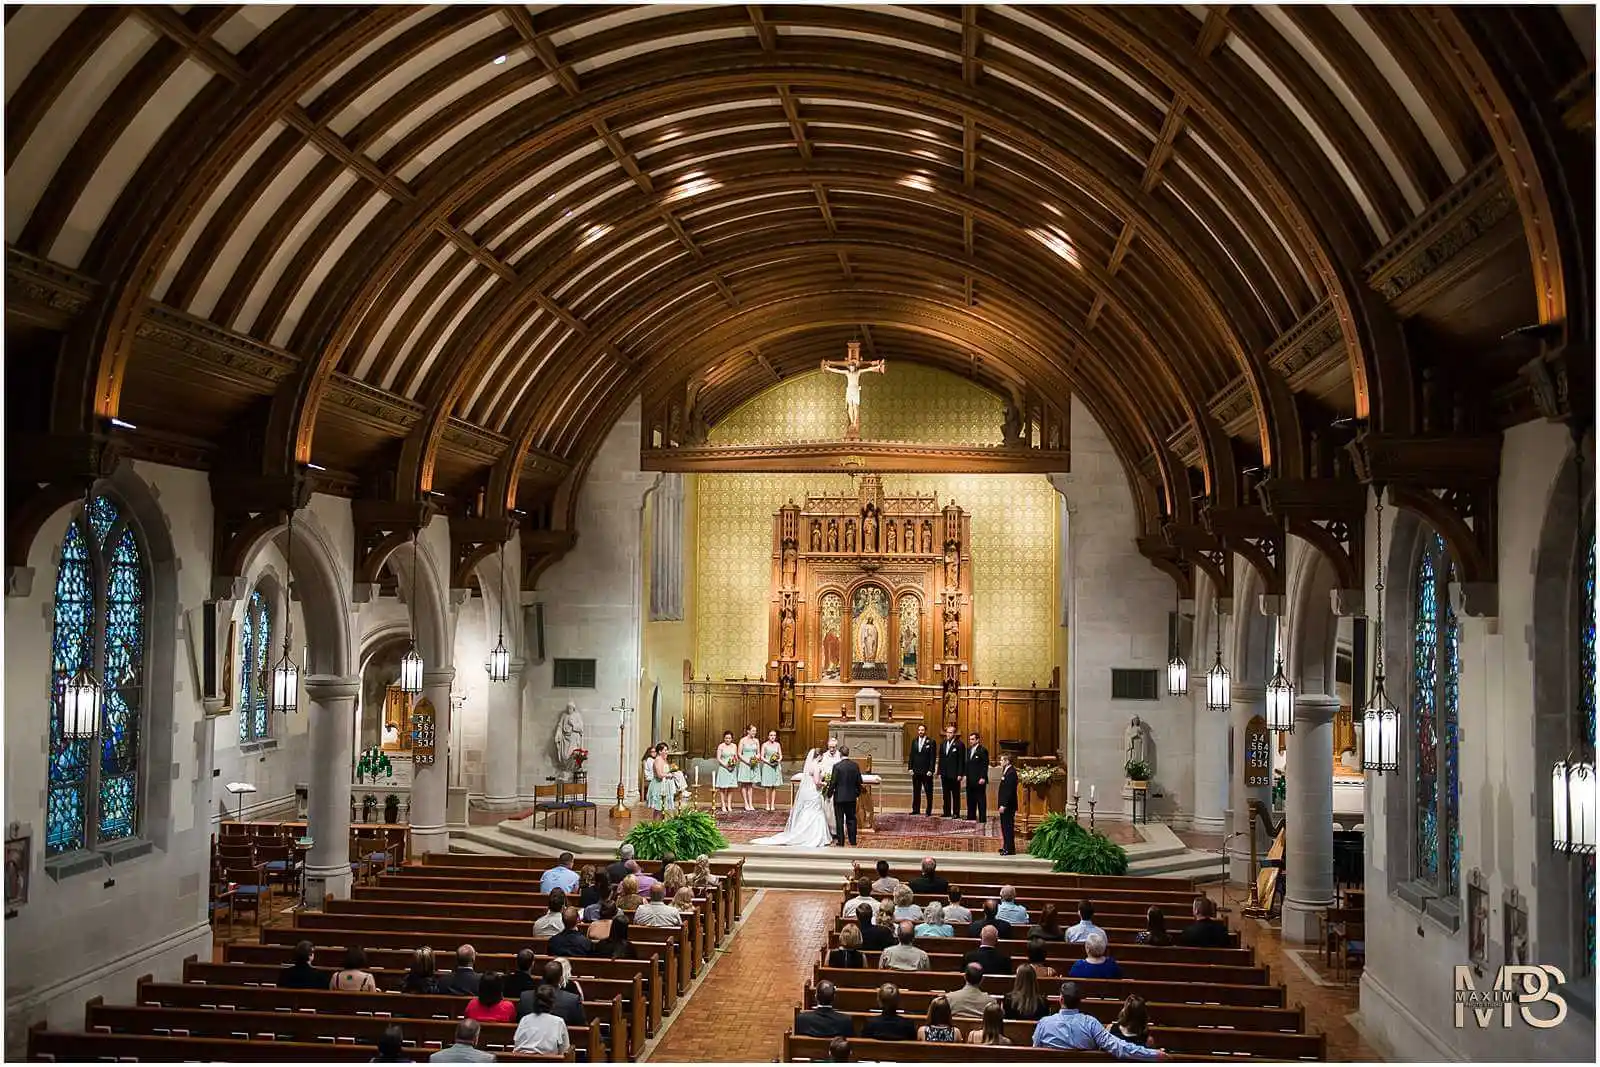 Elegant wedding ceremony in a historic church interior.